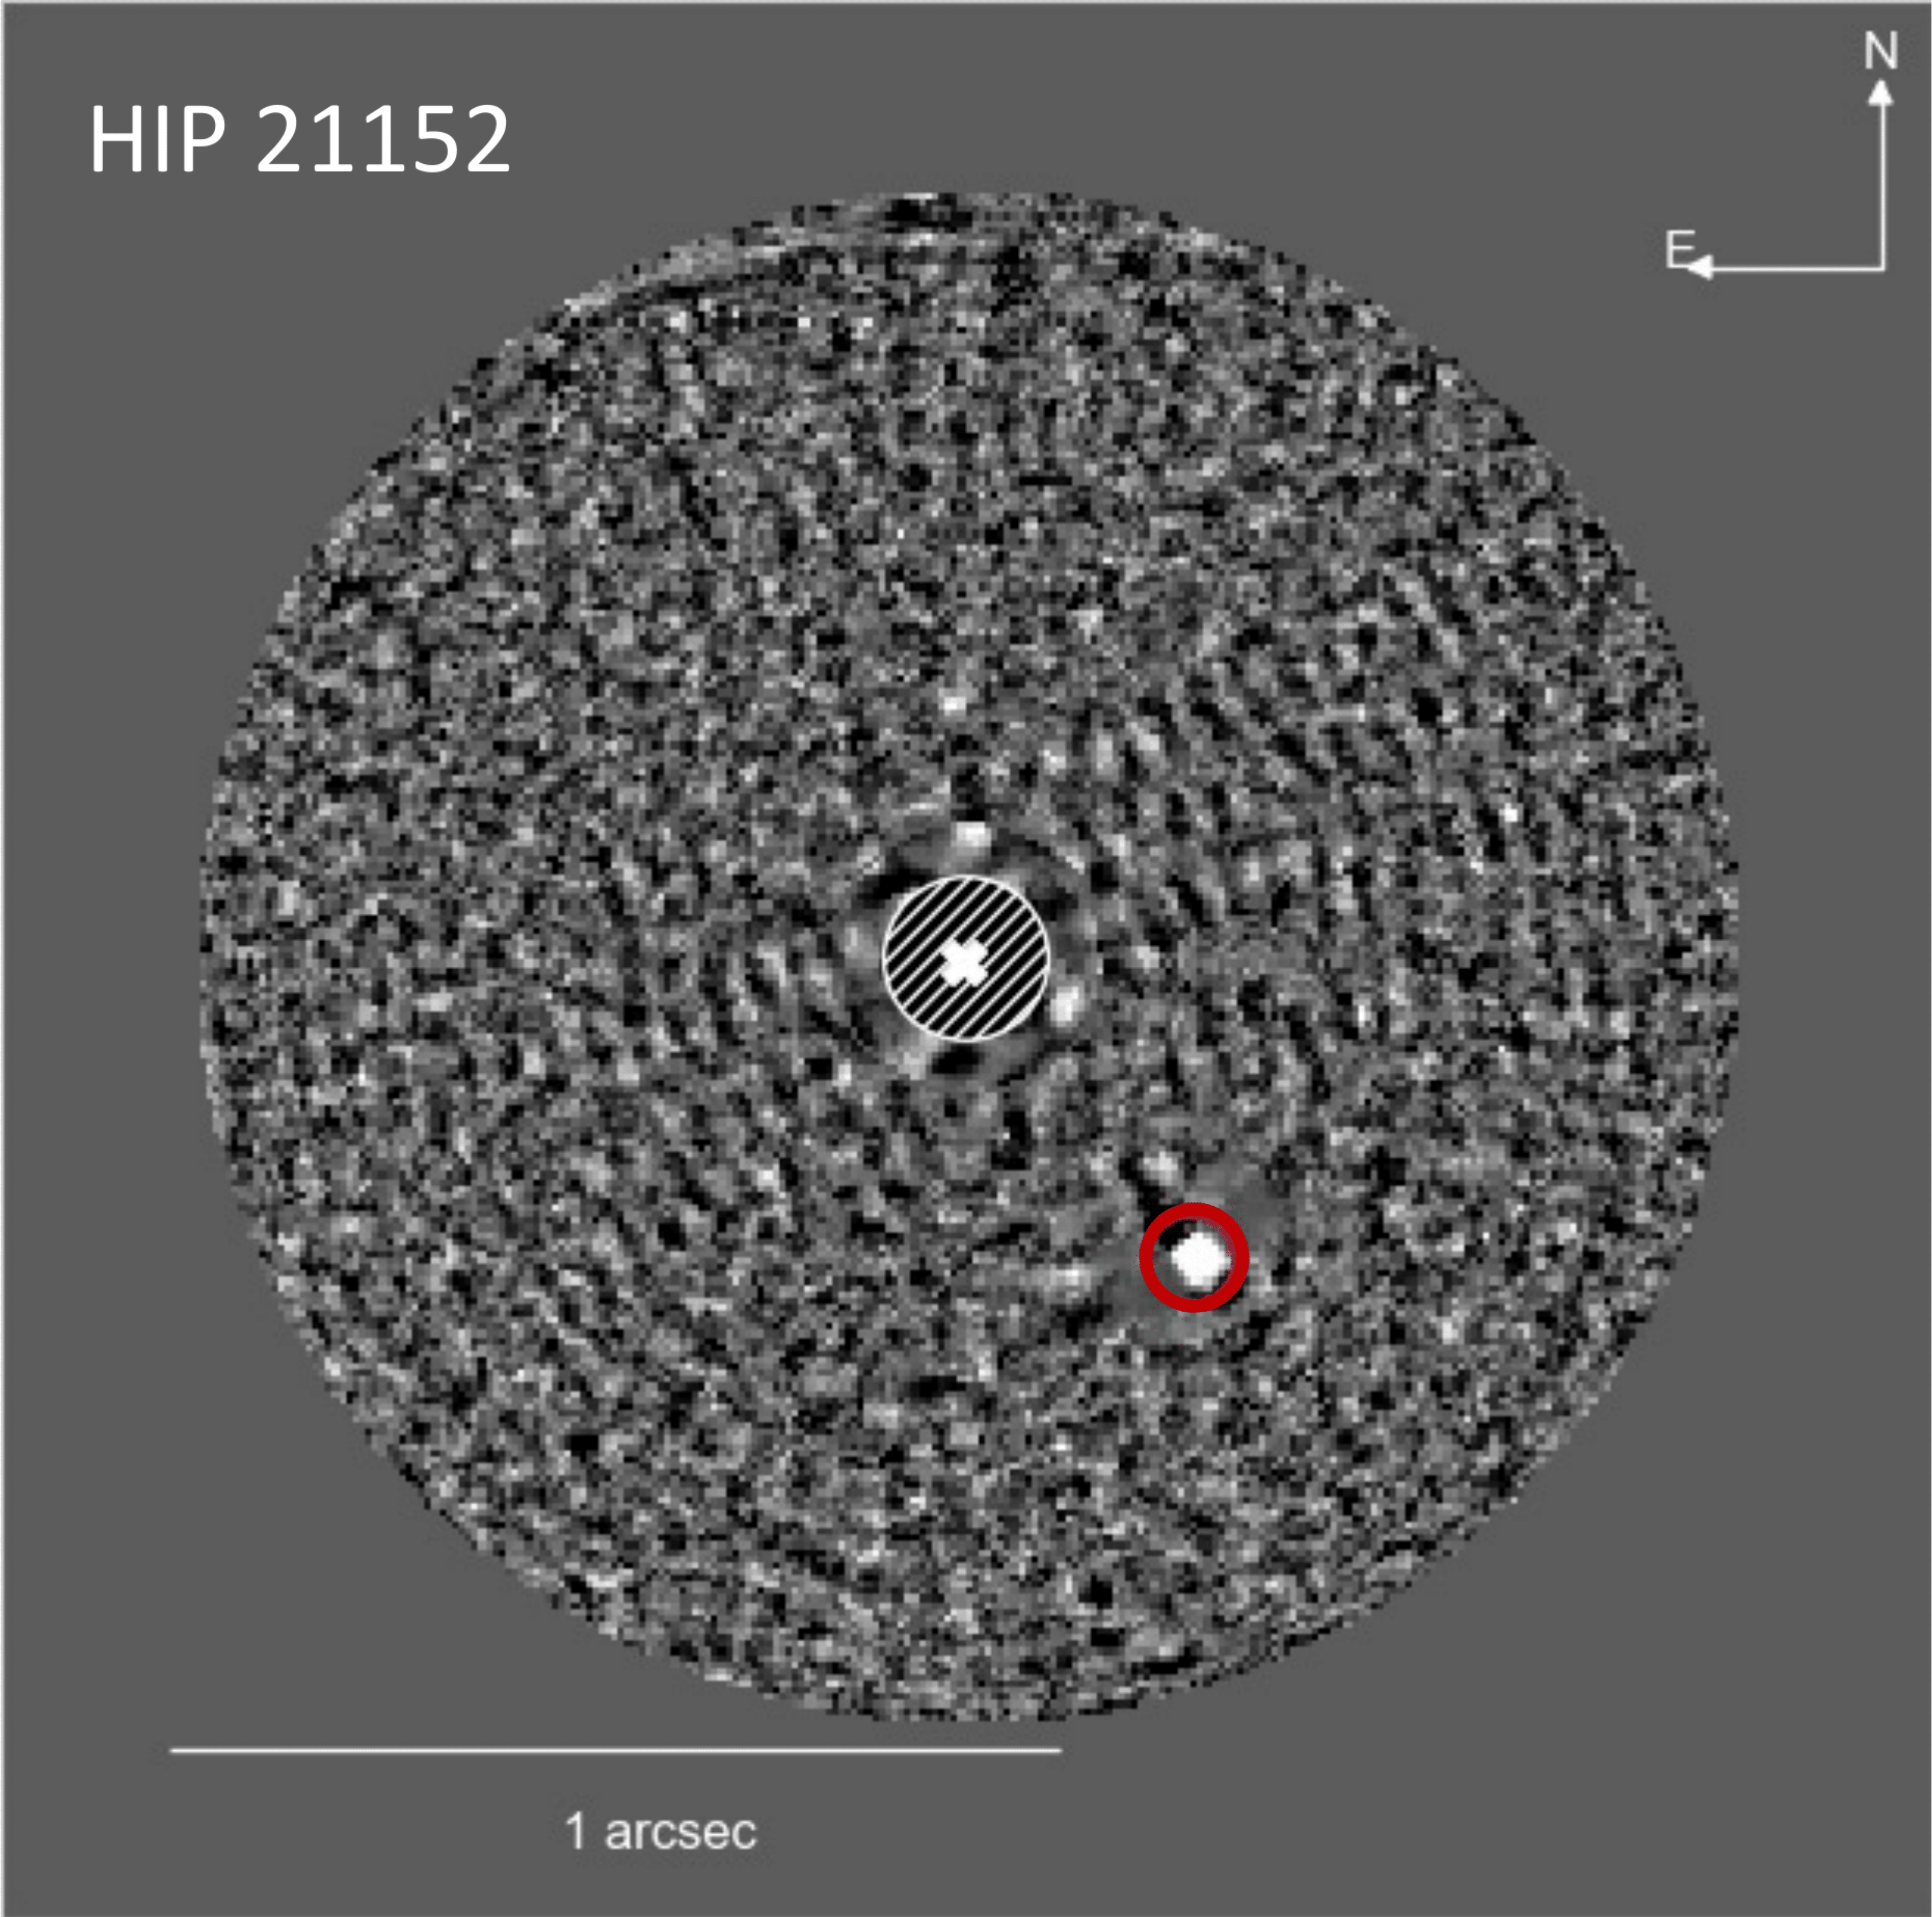 Fontanive Bonavita HIP 21152 brown dwarf SPHERE